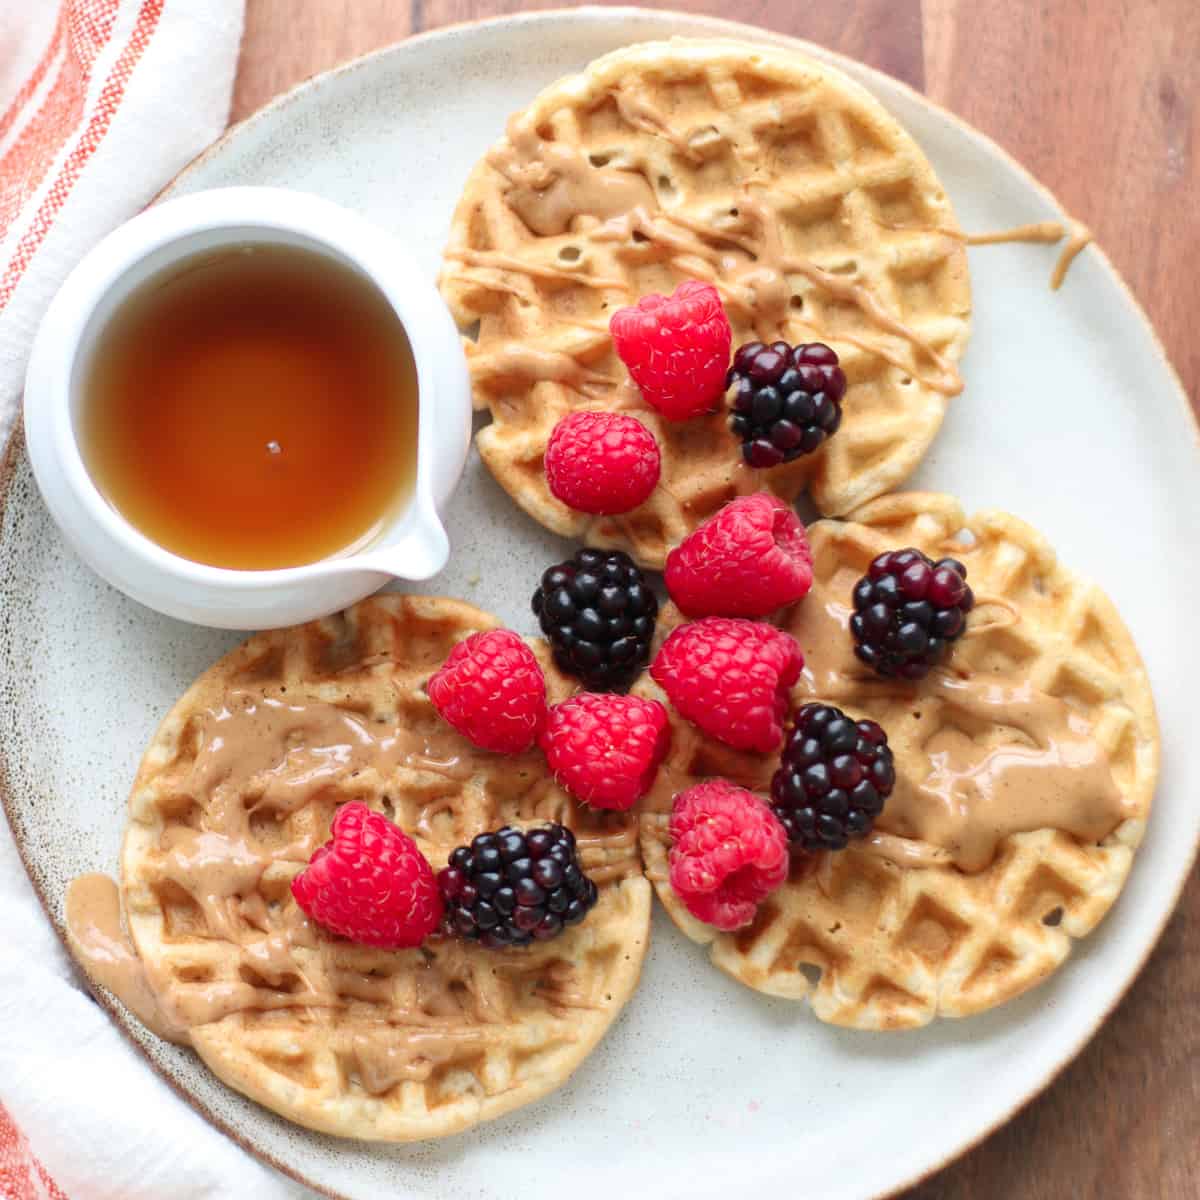 Sunday Breakfast: Whole Foods Mini Waffles